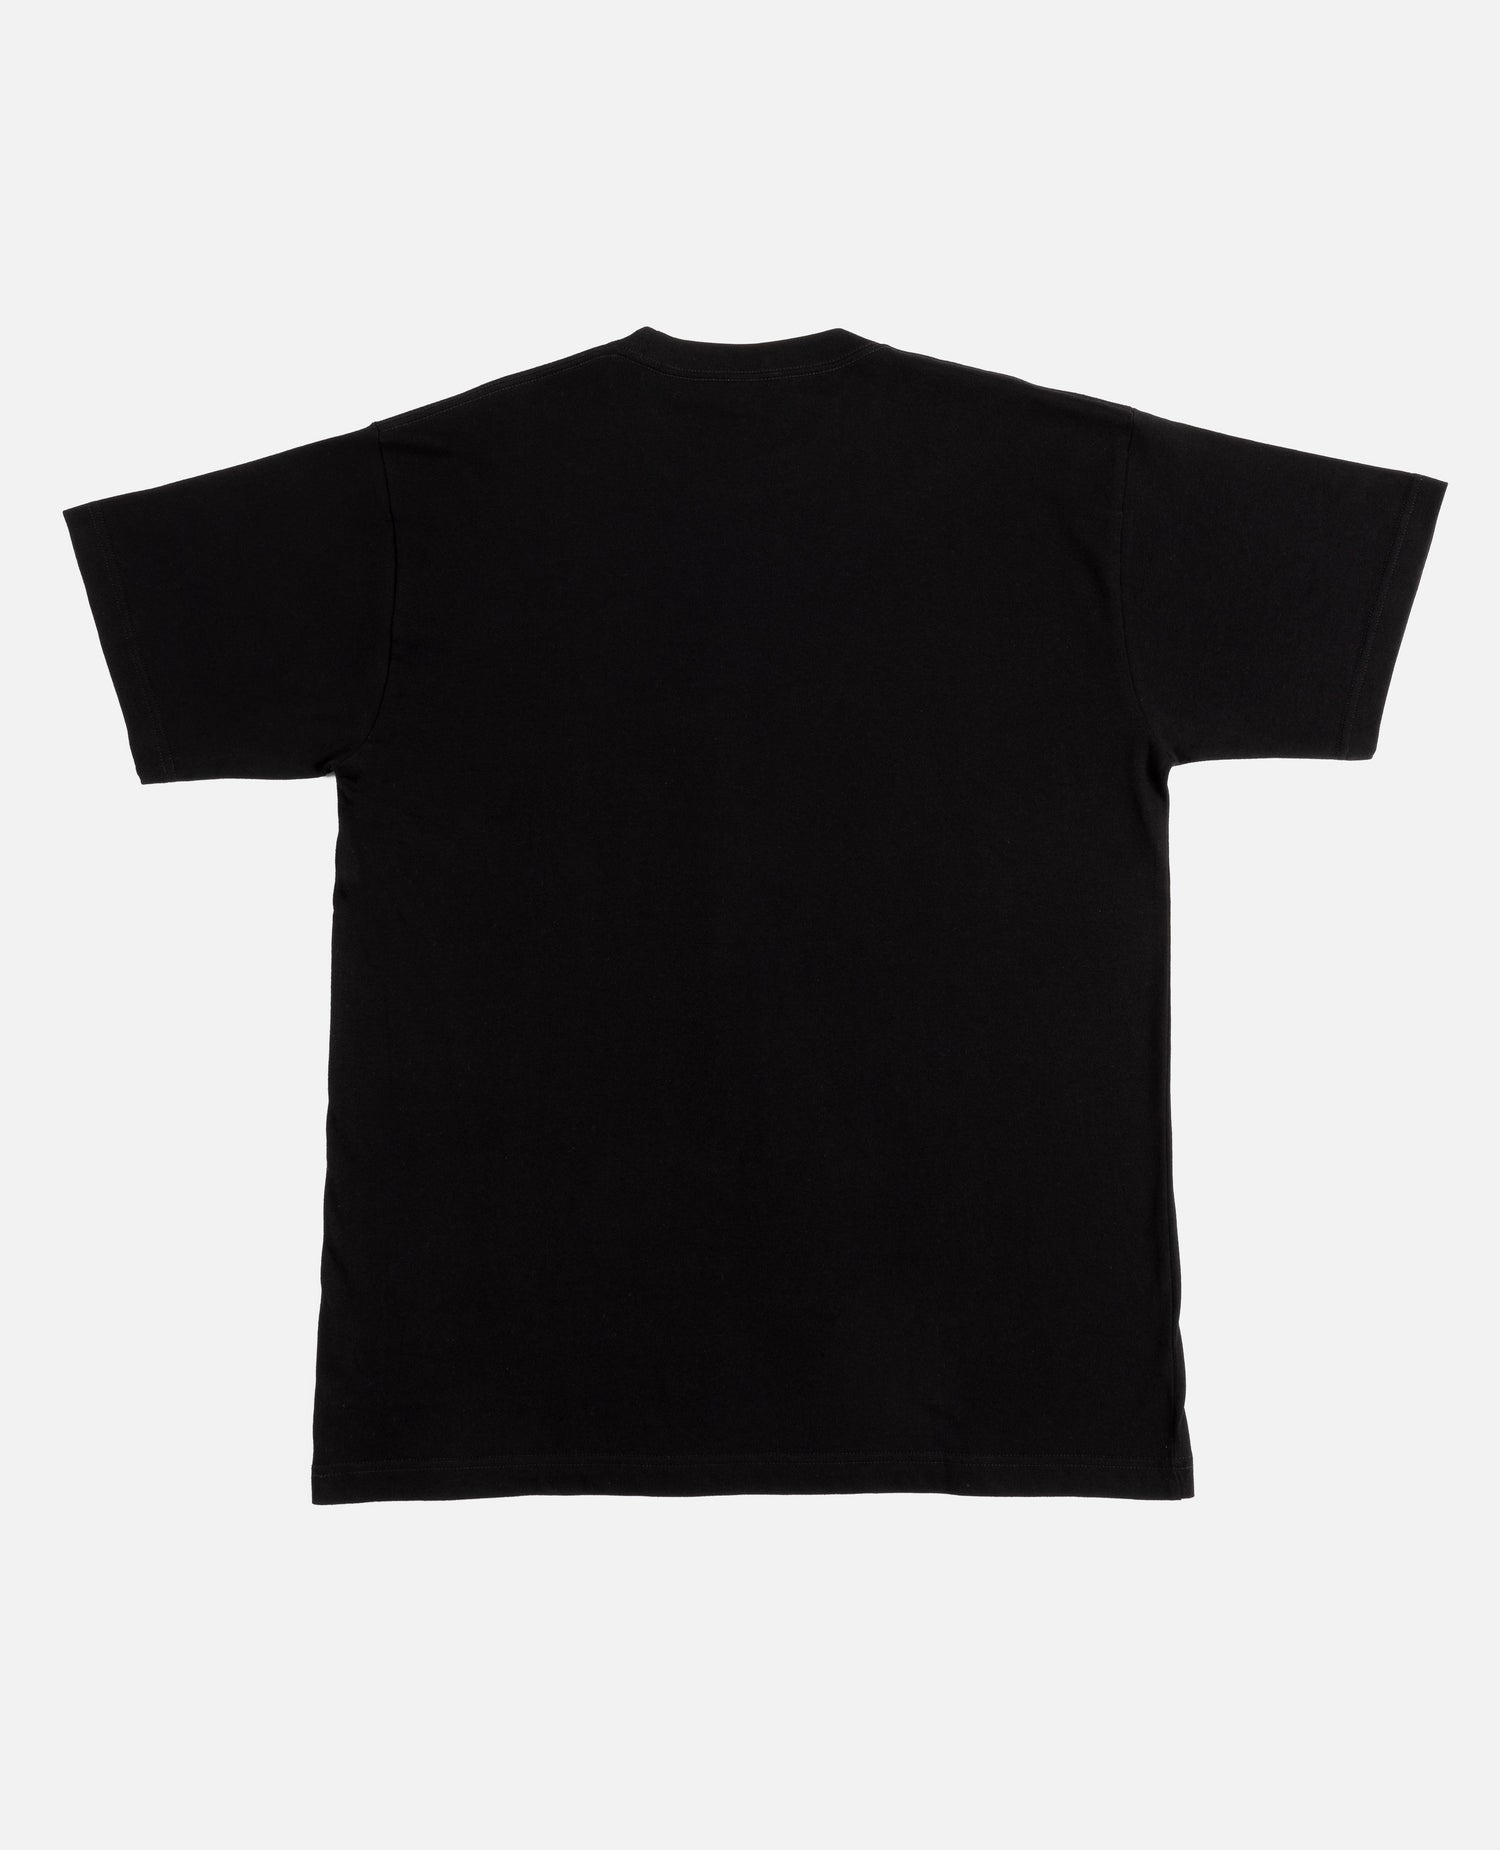 Patta x Andy Wahloo (Hassan Hajjaj) Khamsa Hand T-Shirt (Black)